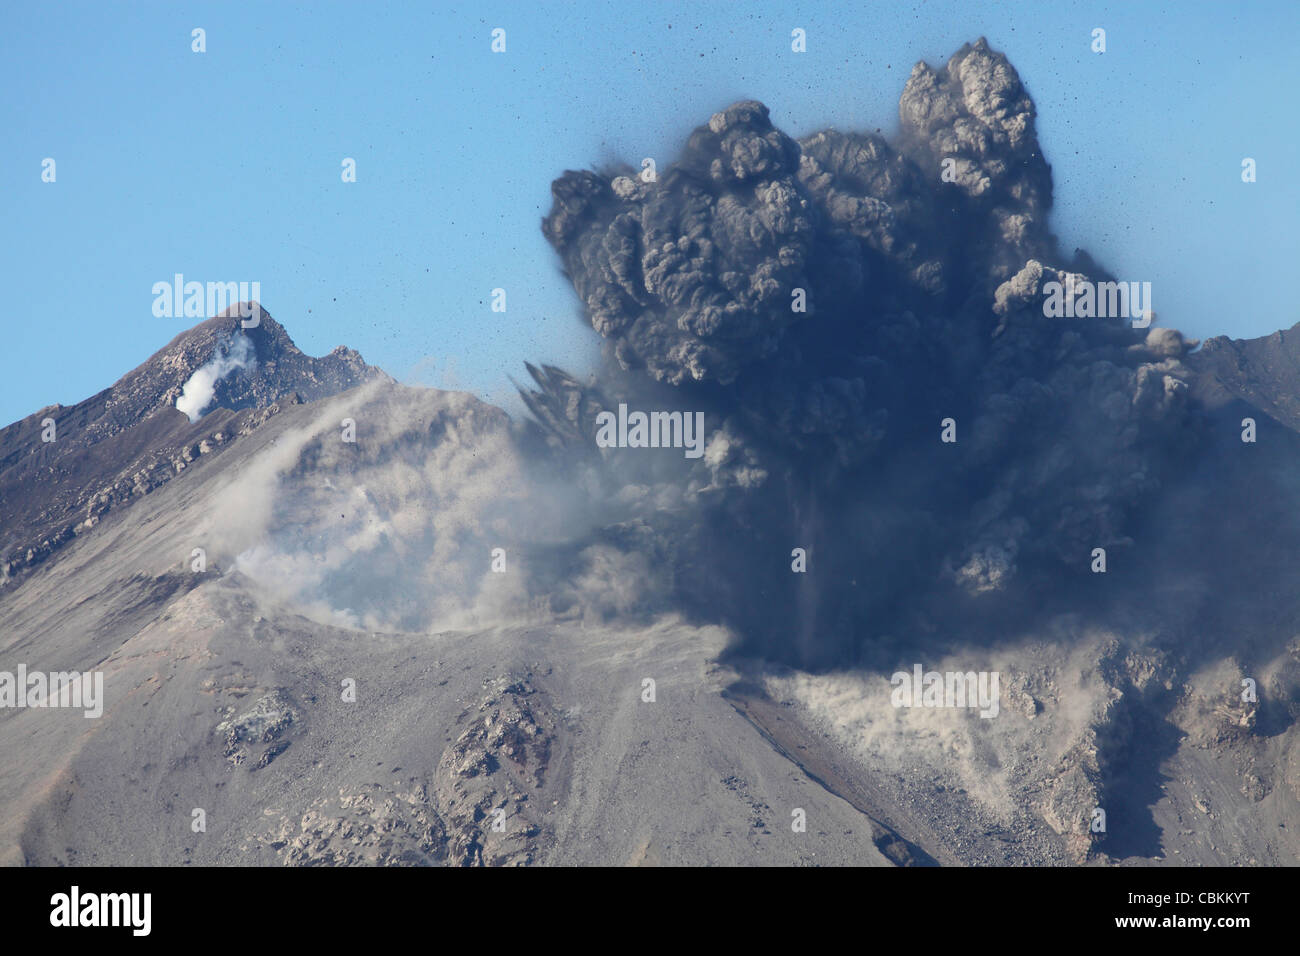 January 4, 2010 - Ash cloud following explosive Vulcanian eruption, Sakurajima Volcano, Japan. Stock Photo